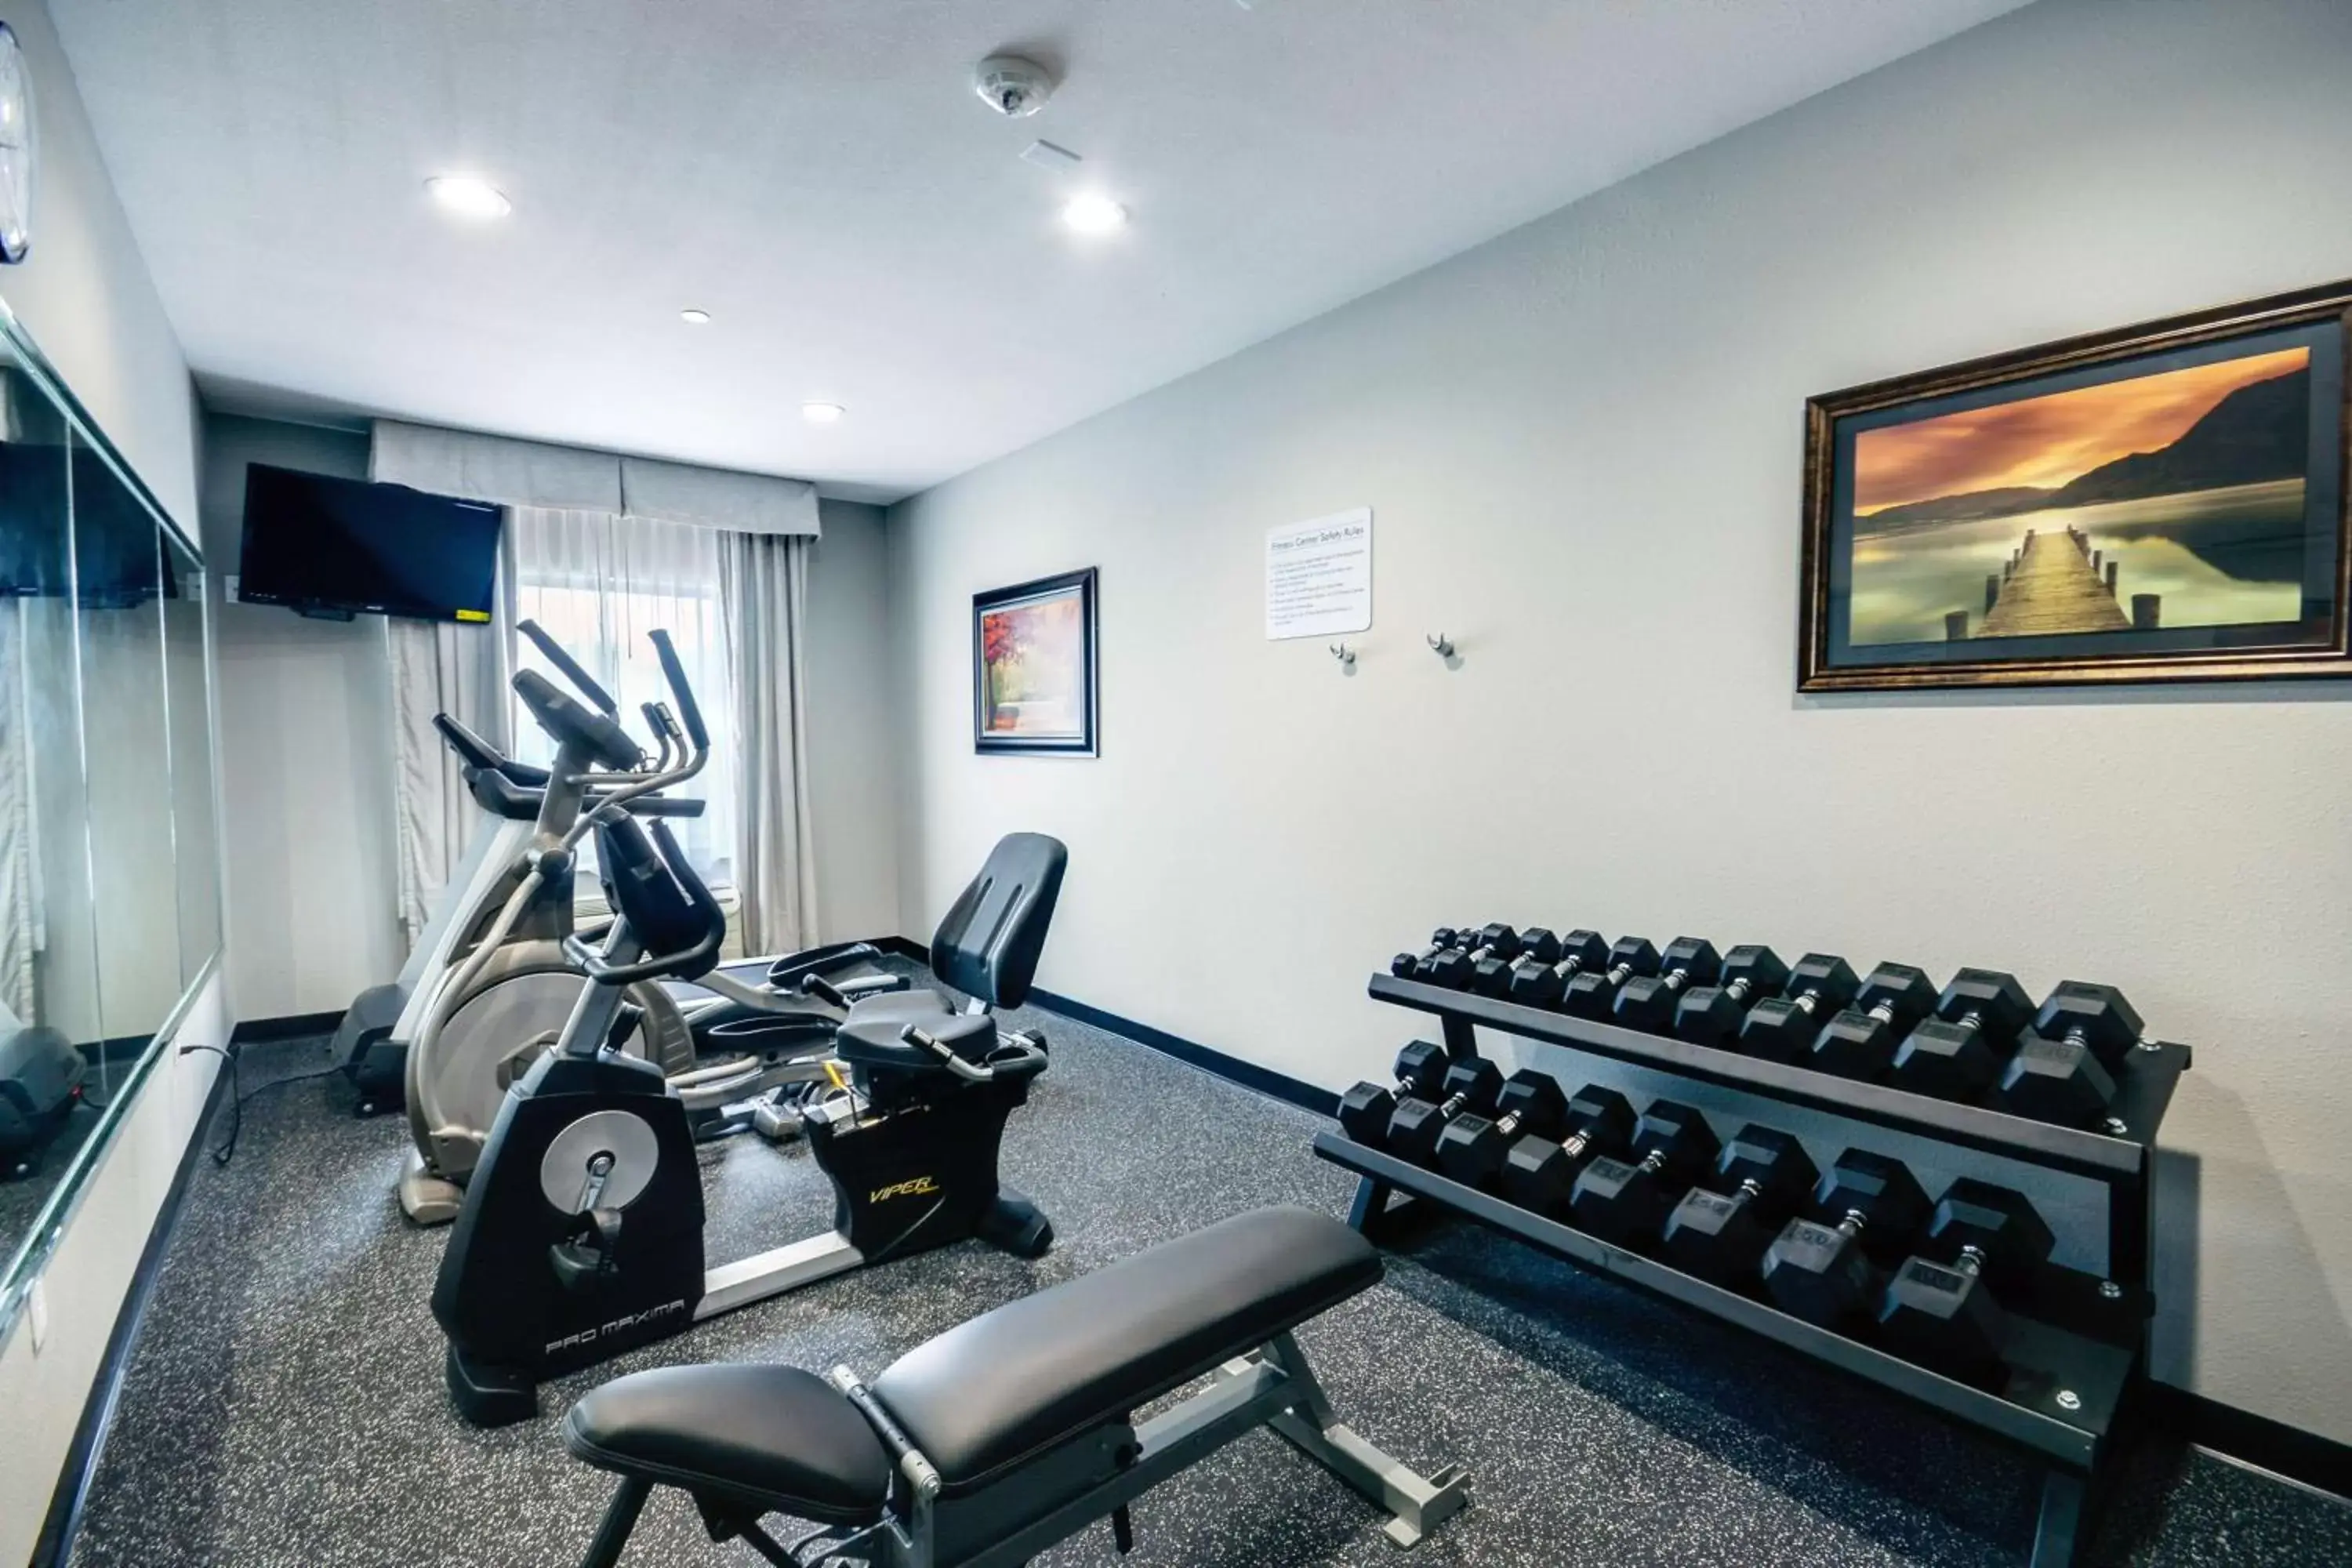 Fitness centre/facilities, Fitness Center/Facilities in Best Western Casino Inn